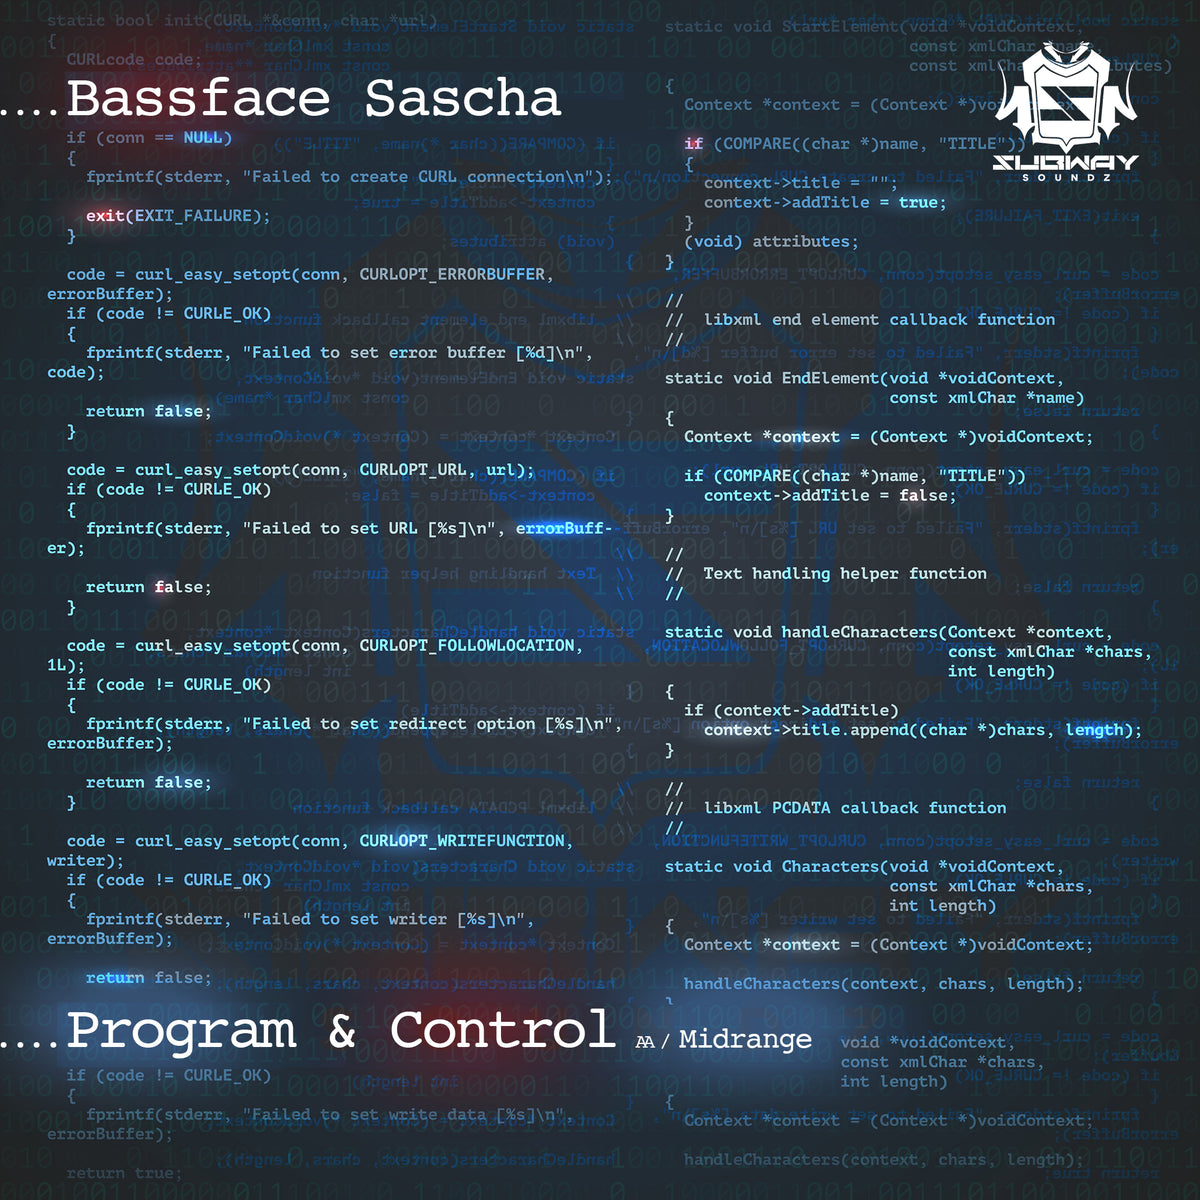 SSLD 056 - Bassface Sascha 'Program & Control' | 'The Midrange'